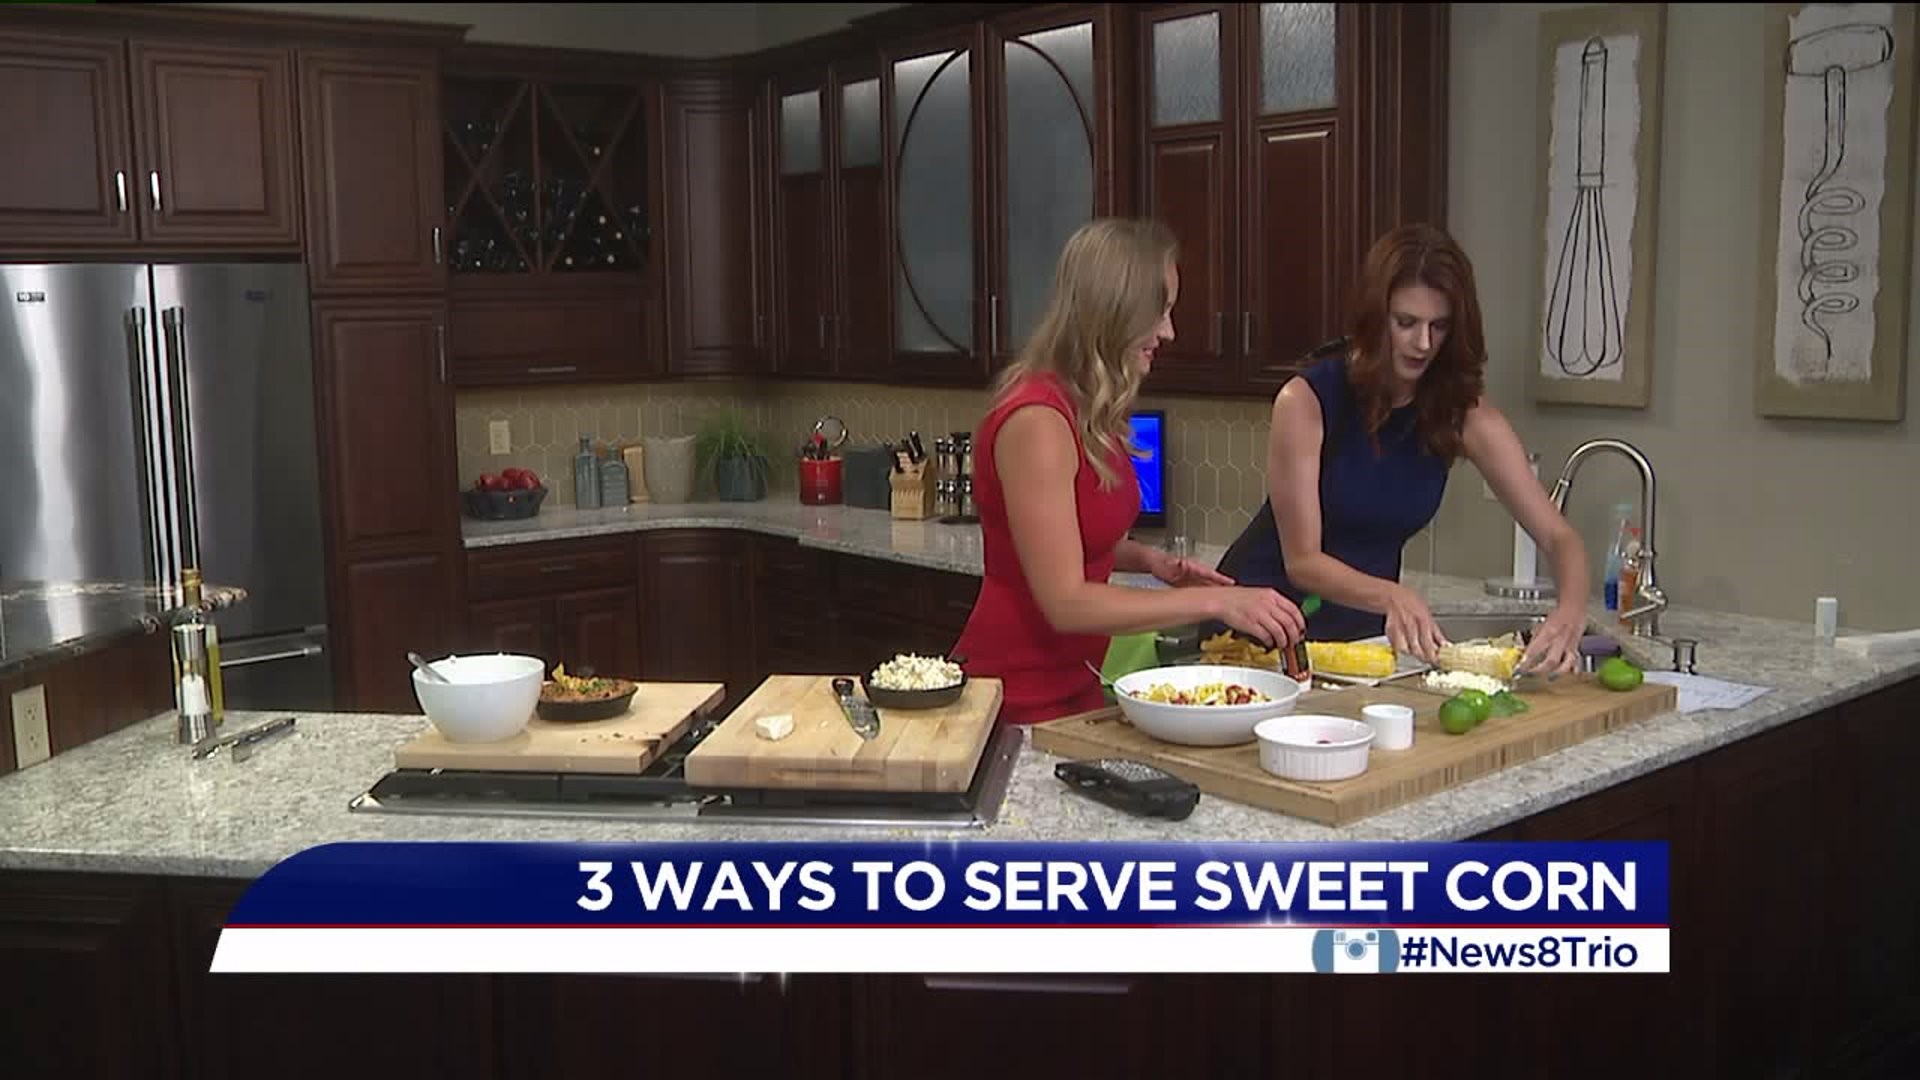 NEWS 8 TRIO: 3 ways to serve sweet corn pt. 2